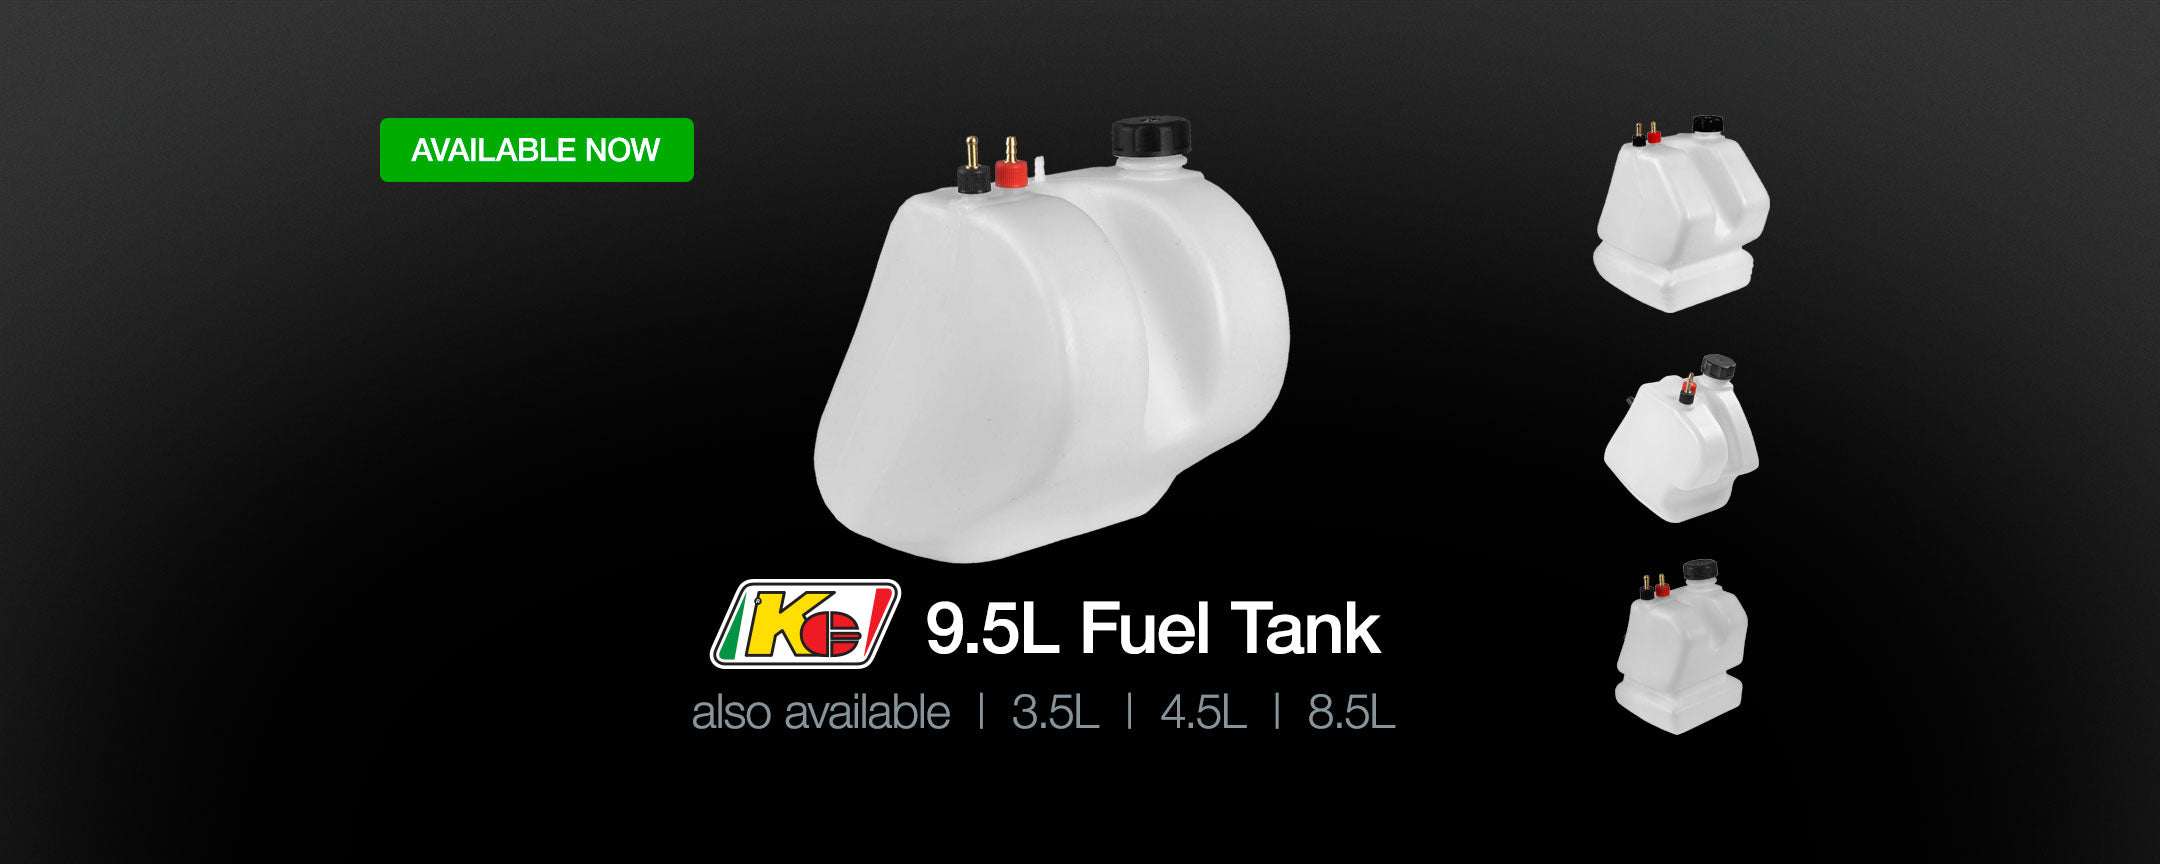 Go Kart Fuel Tank 9.5L. KG Kart Fuel Tank